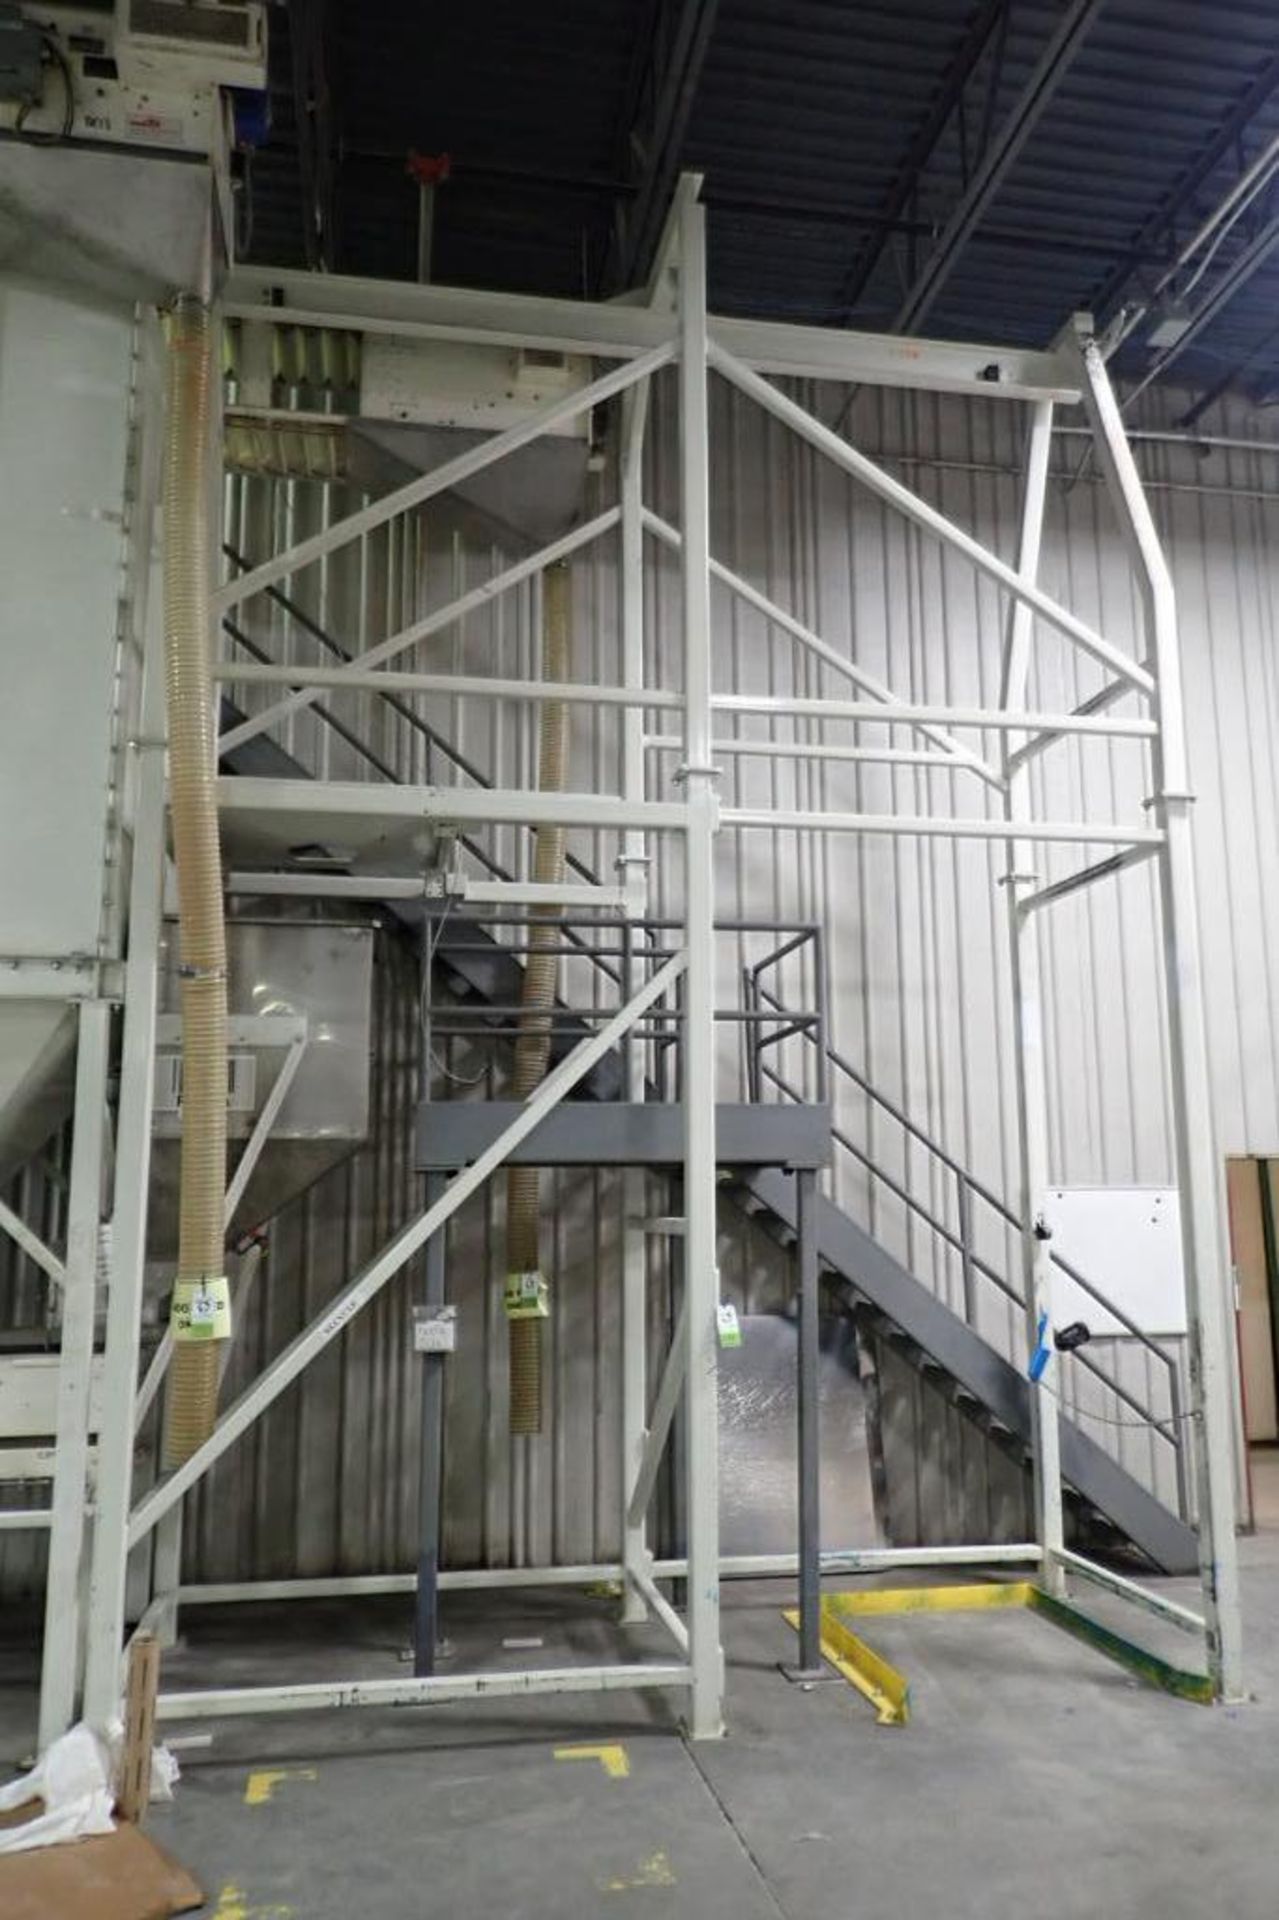 Mild steel super sack station, mild steel, bolt together, 172 in. long x 64 in. wide x 21 ft. tall,